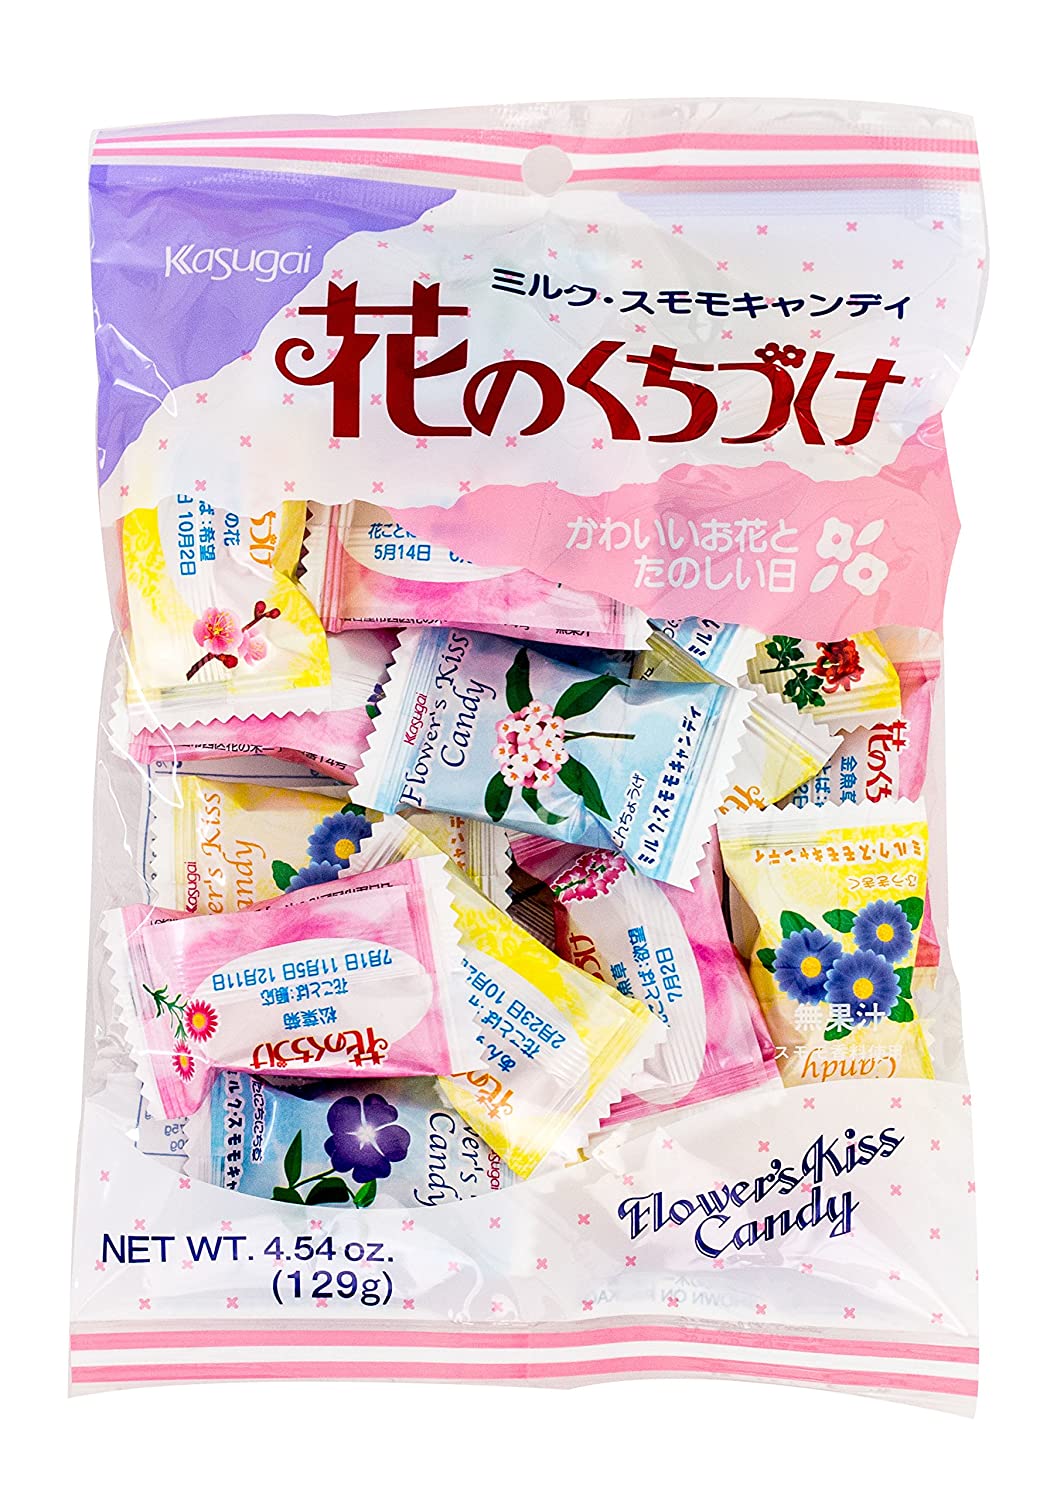 Kasugai Flower Kiss Candy